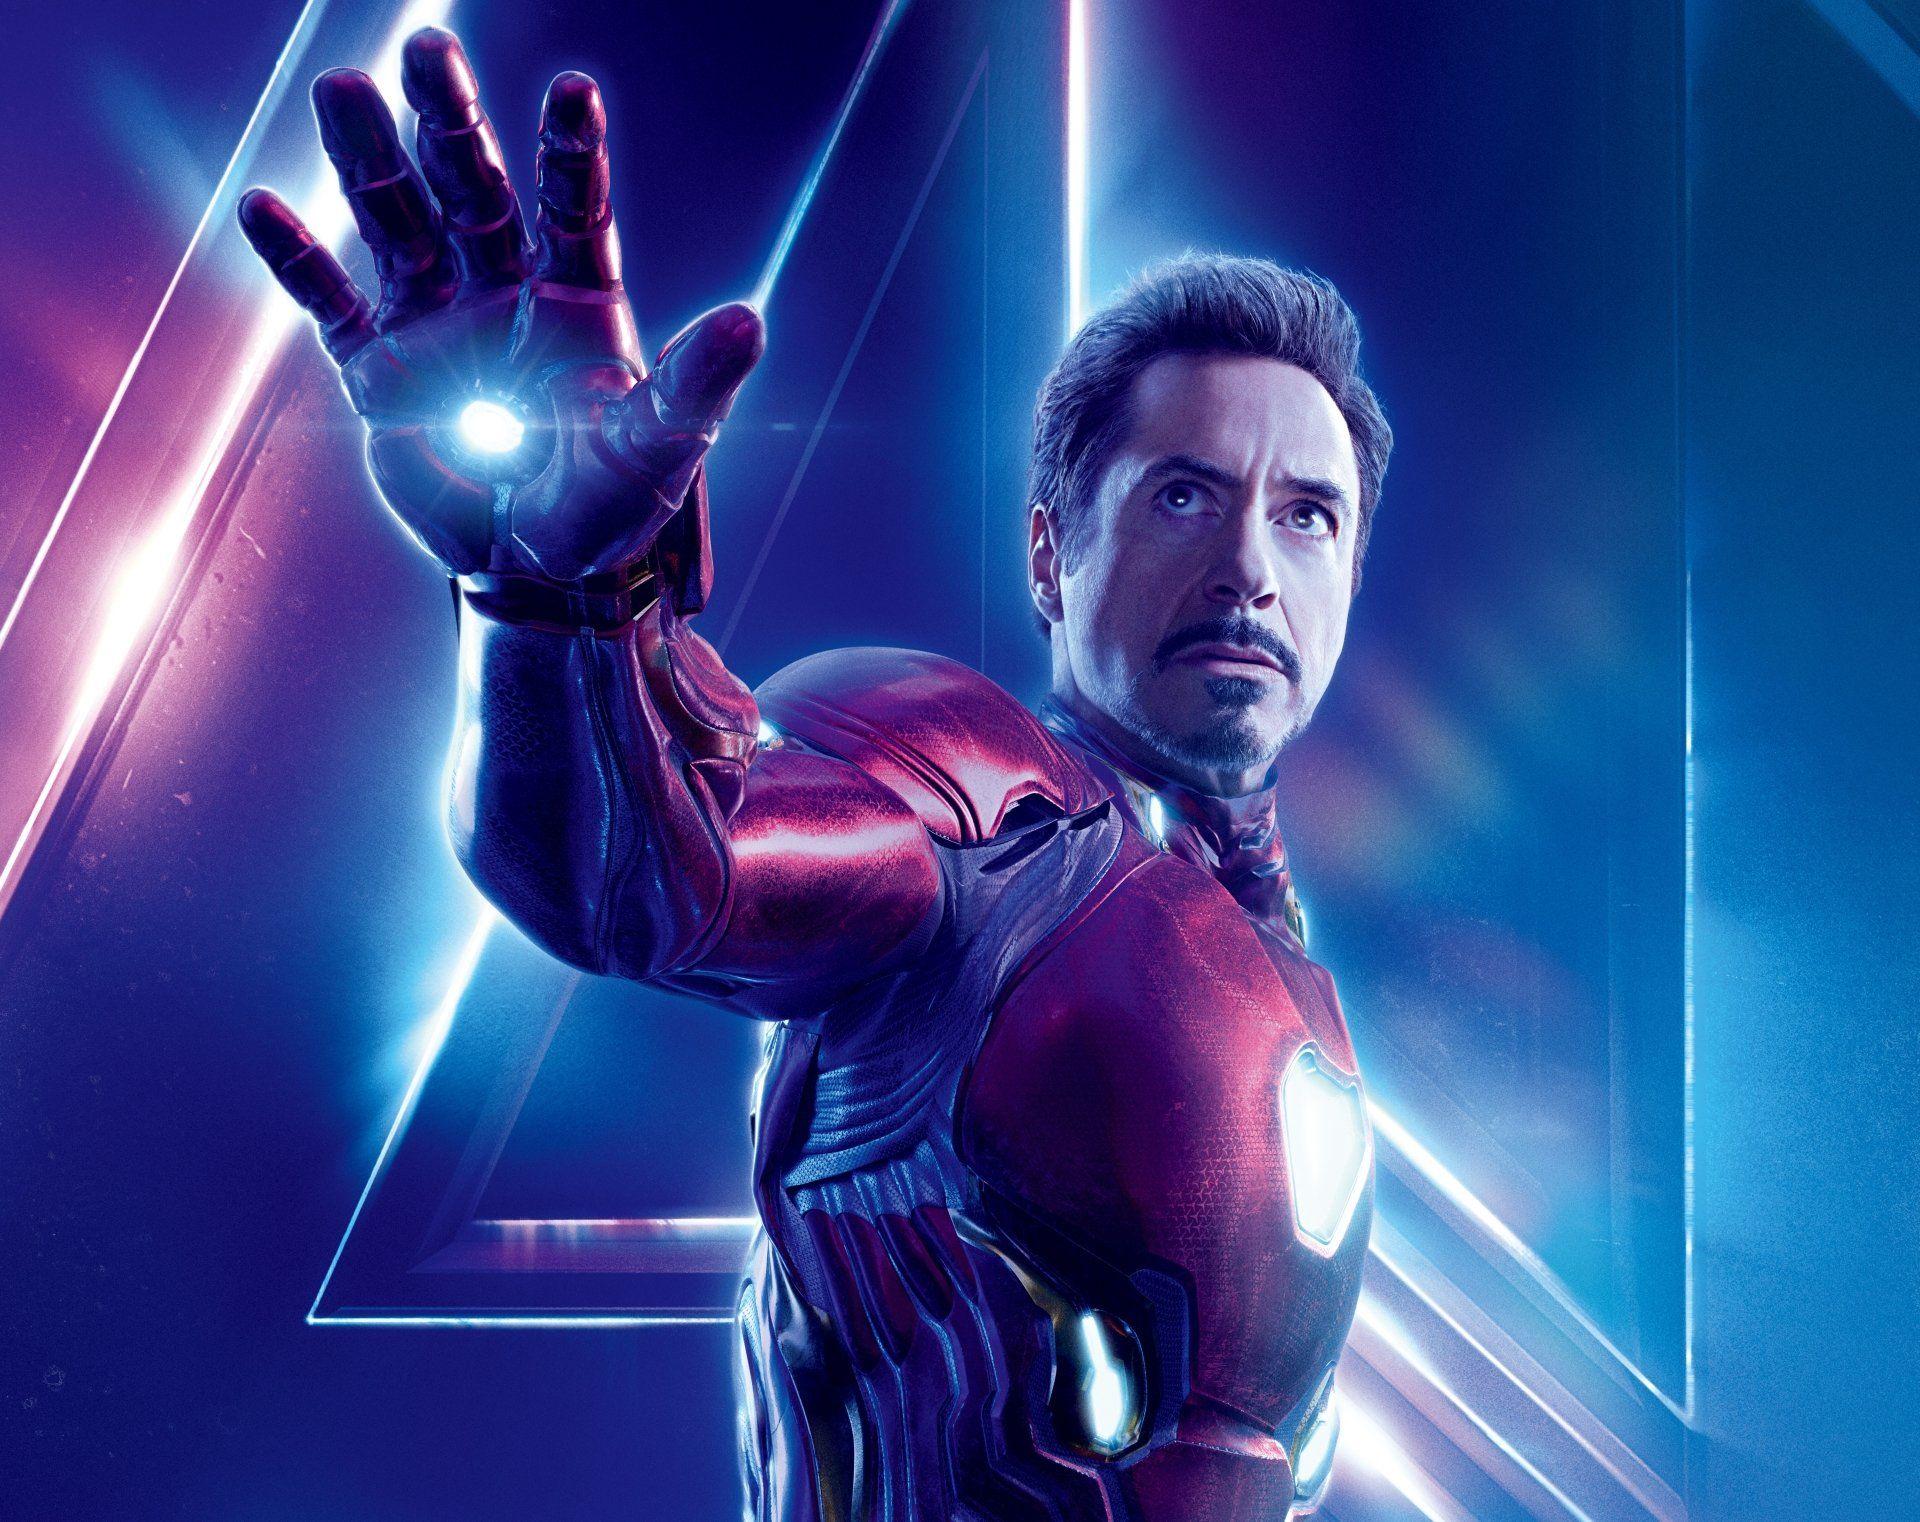 Iron Man (Avengers Infinity War) 8k Ultra HD Wallpaper and Background Imagex6287. Tony stark, Iron man avengers, Iron man